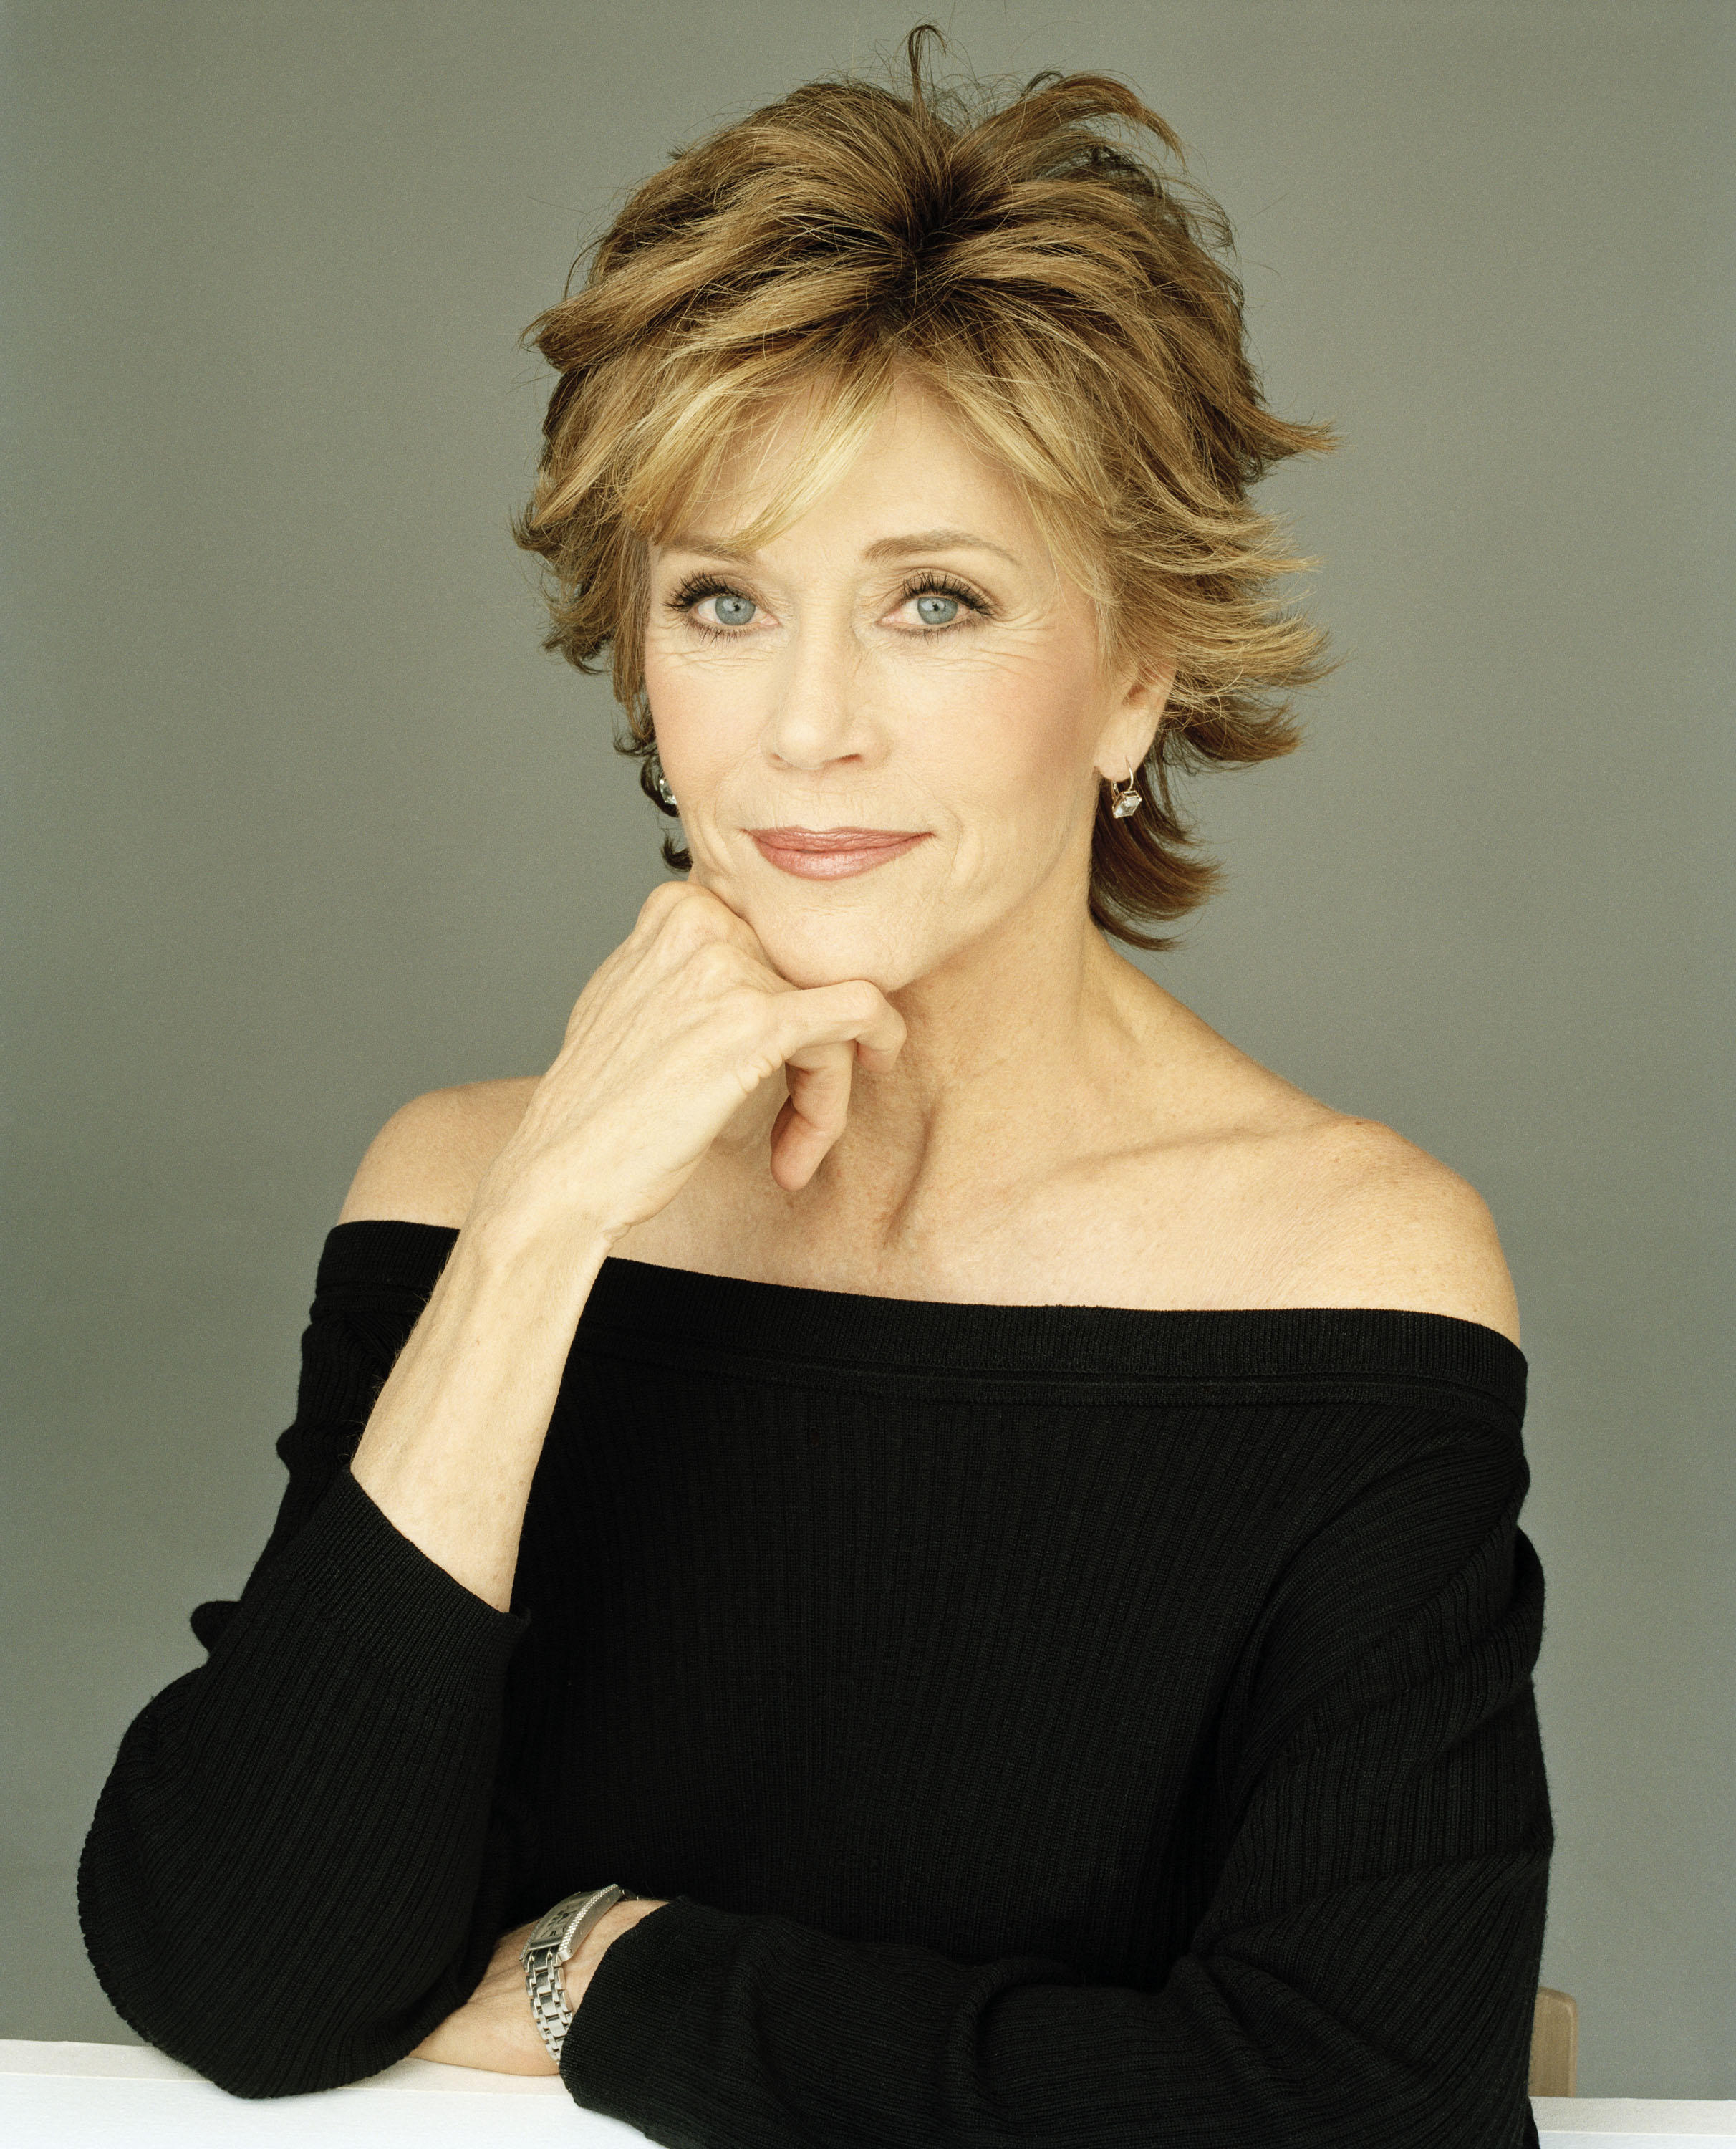 Jane Fonda High Quality Background on Wallpapers Vista